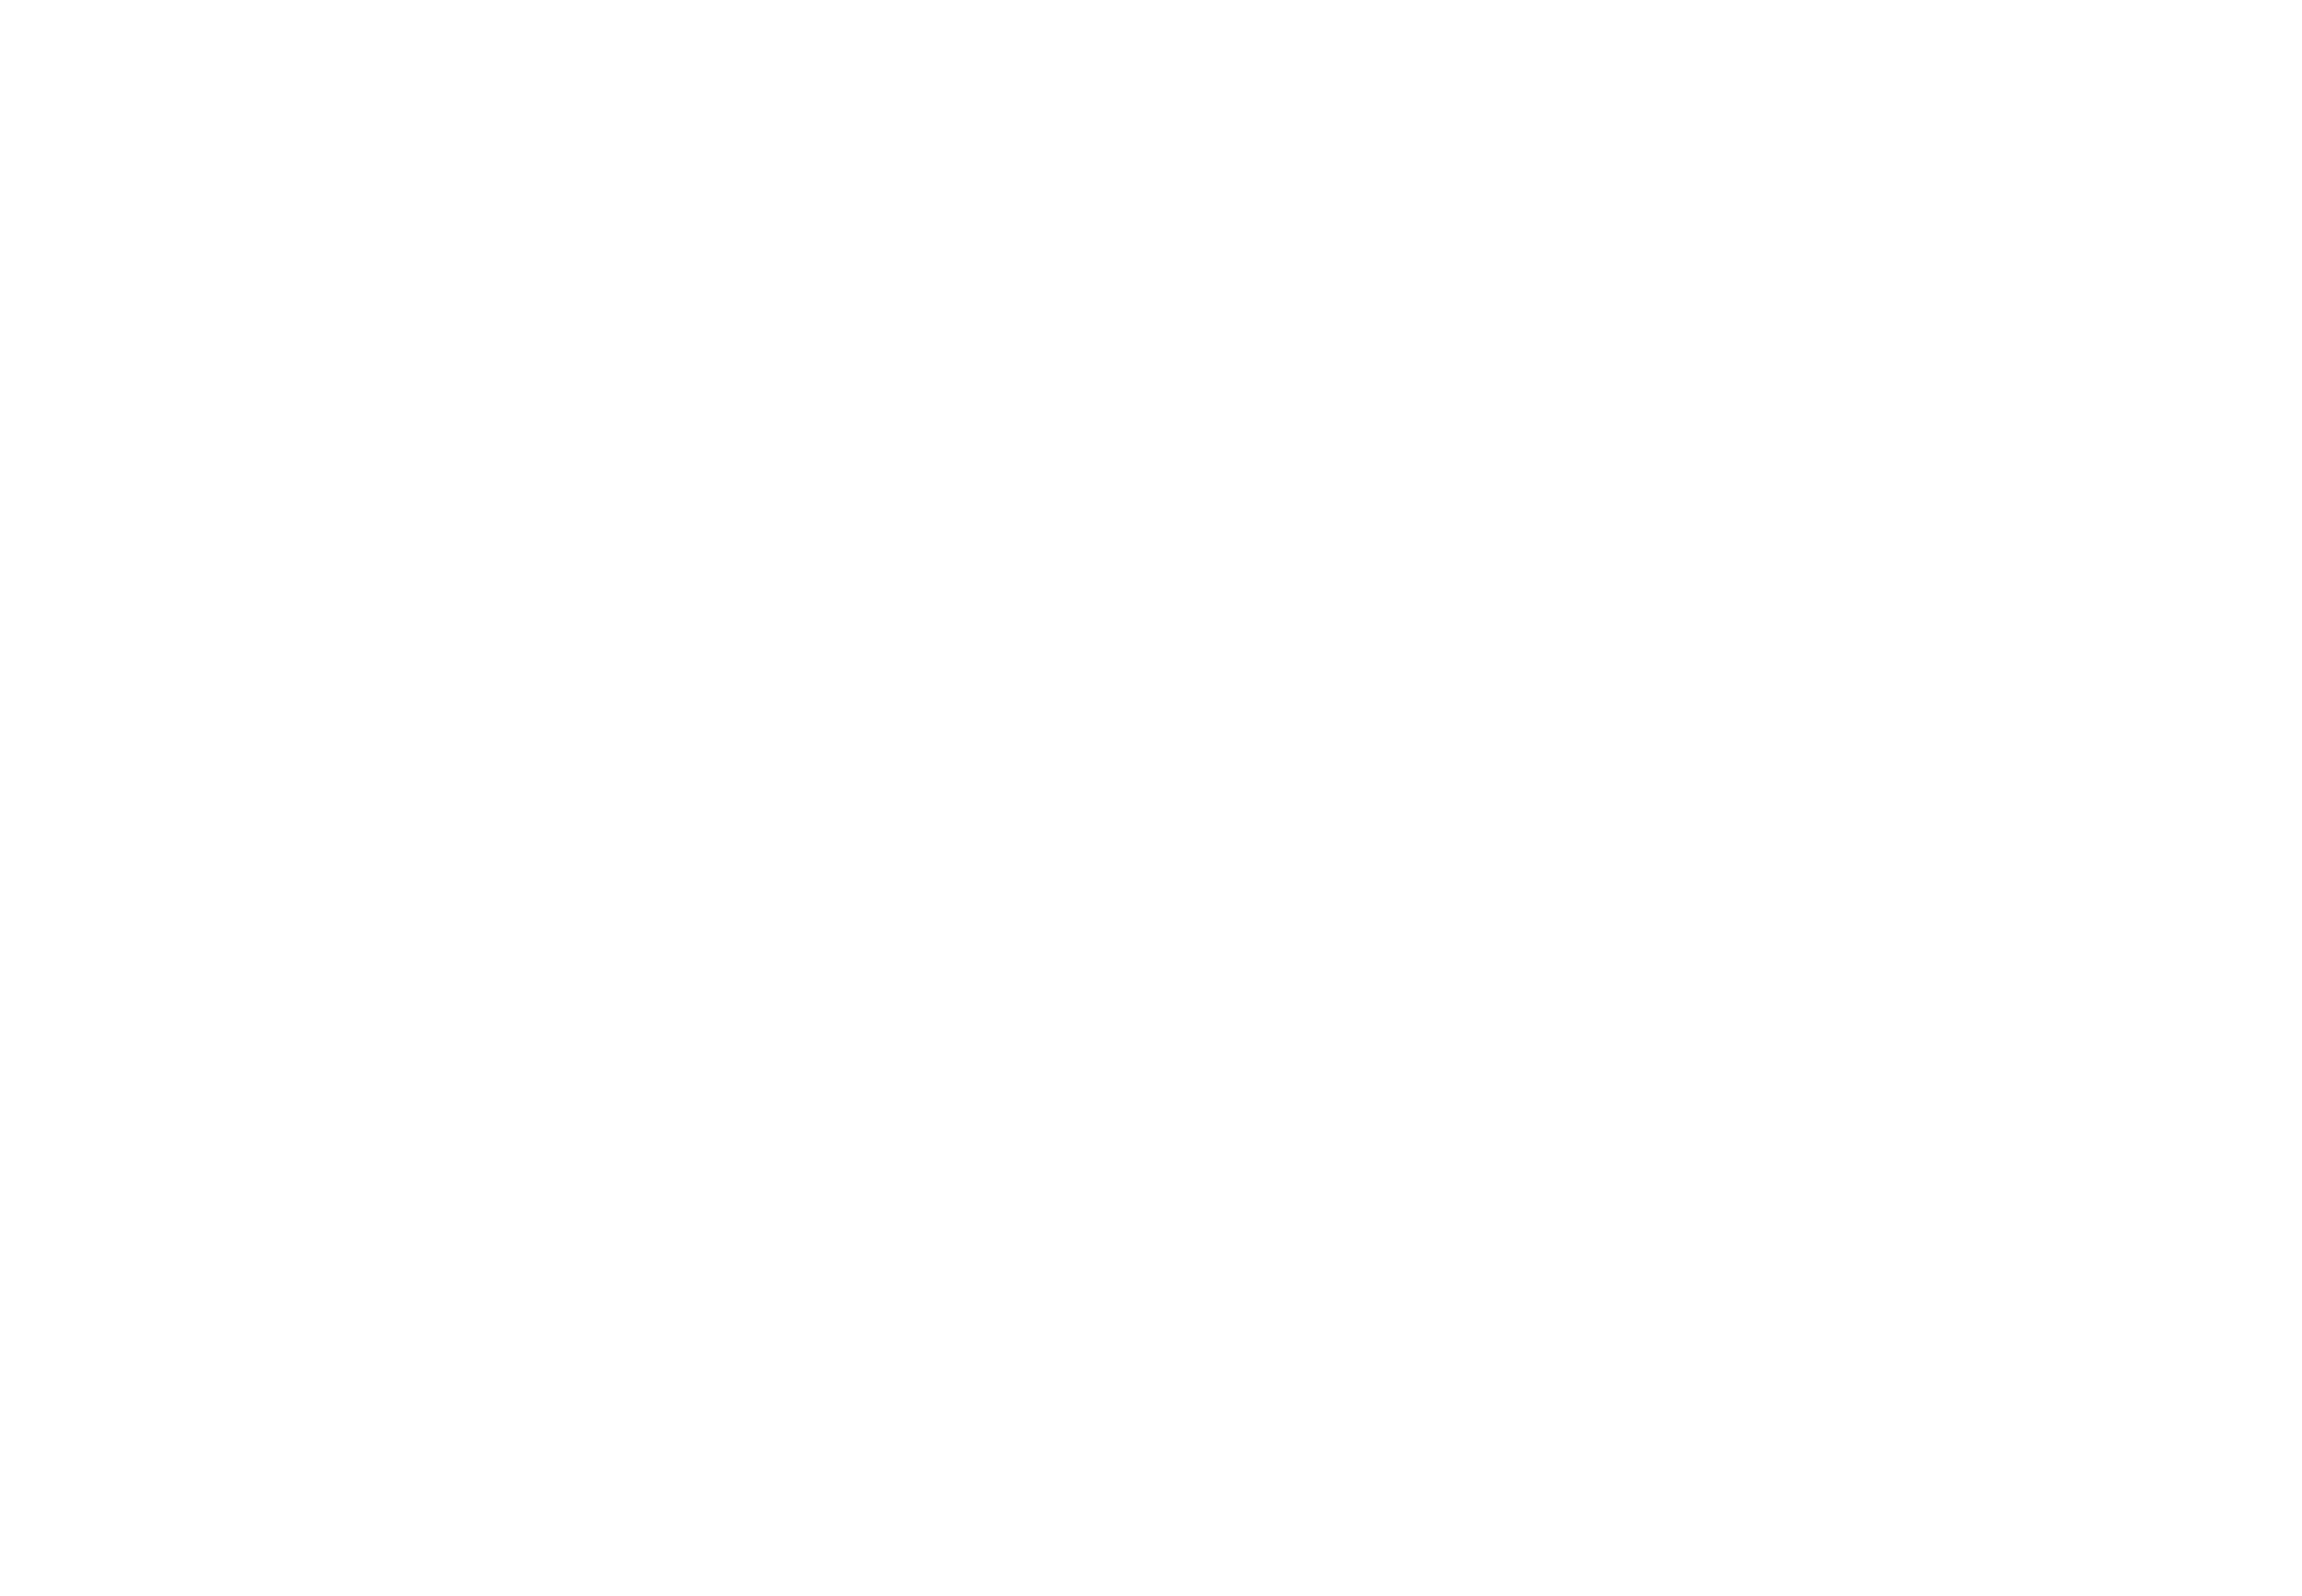 MySQL Logo - MySql Logo PNG Transparent & SVG Vector